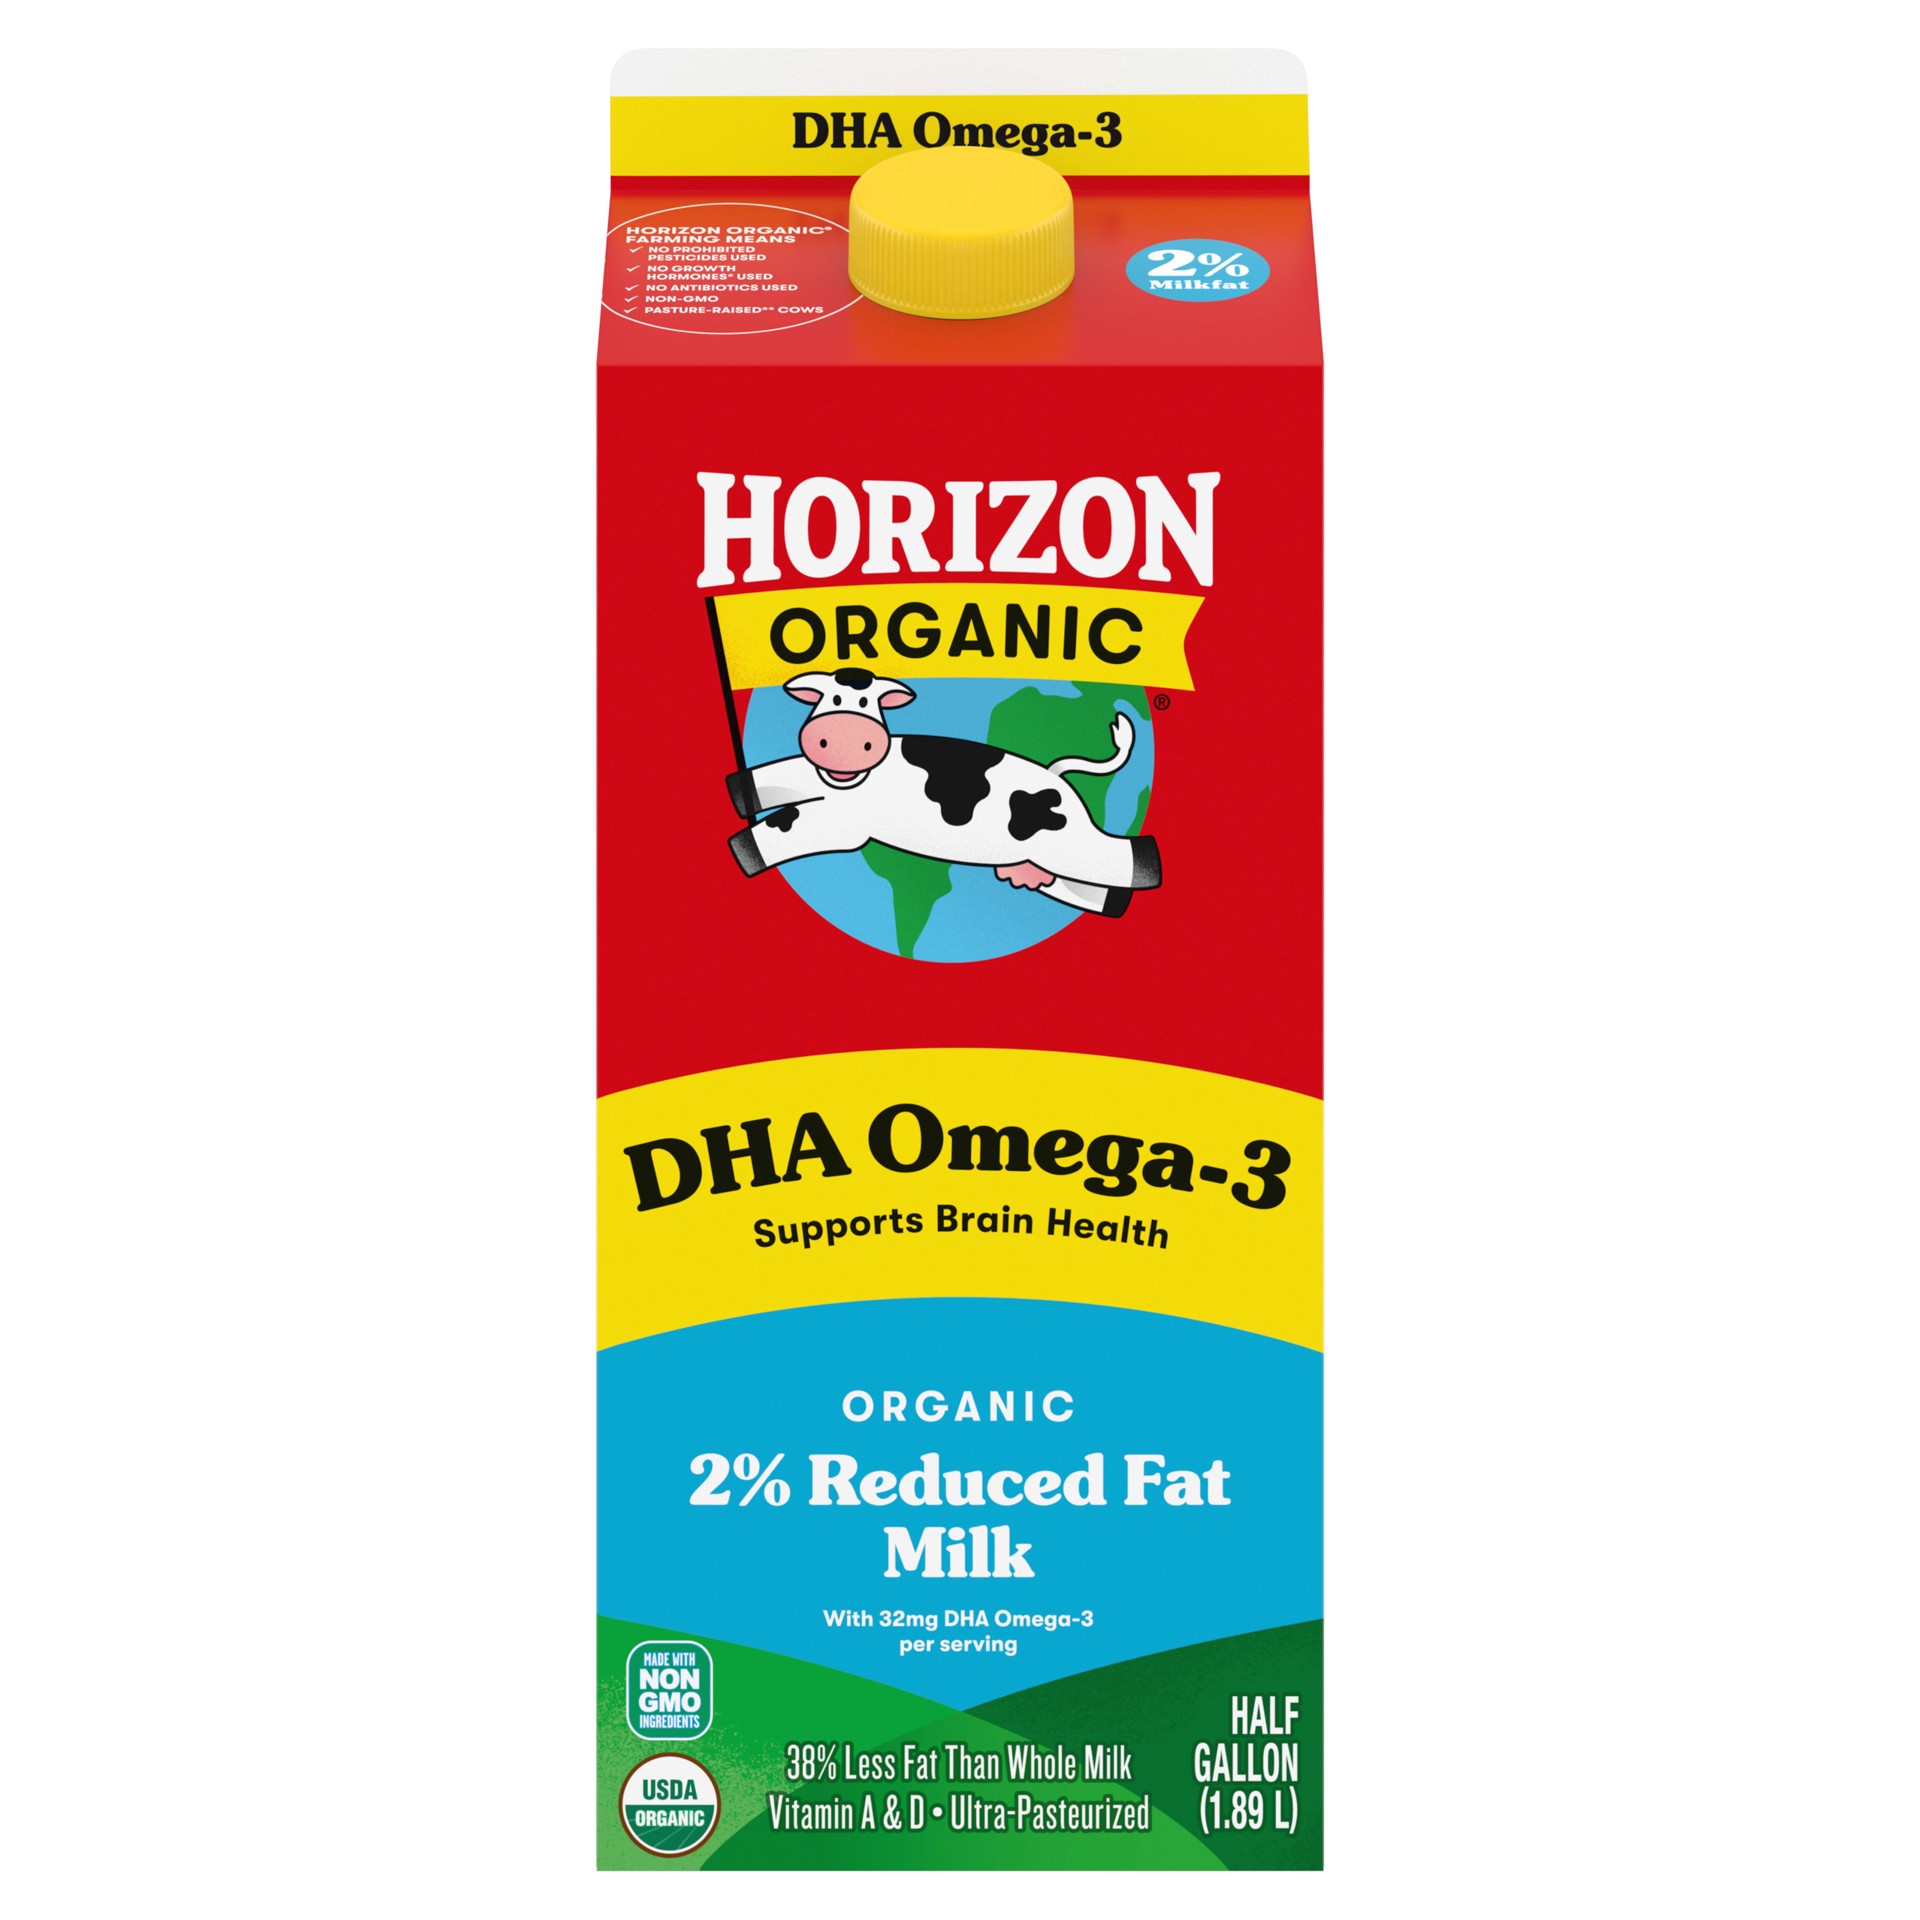 slide 1 of 12, Horizon Organic DHA Omega-3 Milk, DHA 2 Percent Milk, 64 FL OZ Half Gallon Carton, 64 fl oz